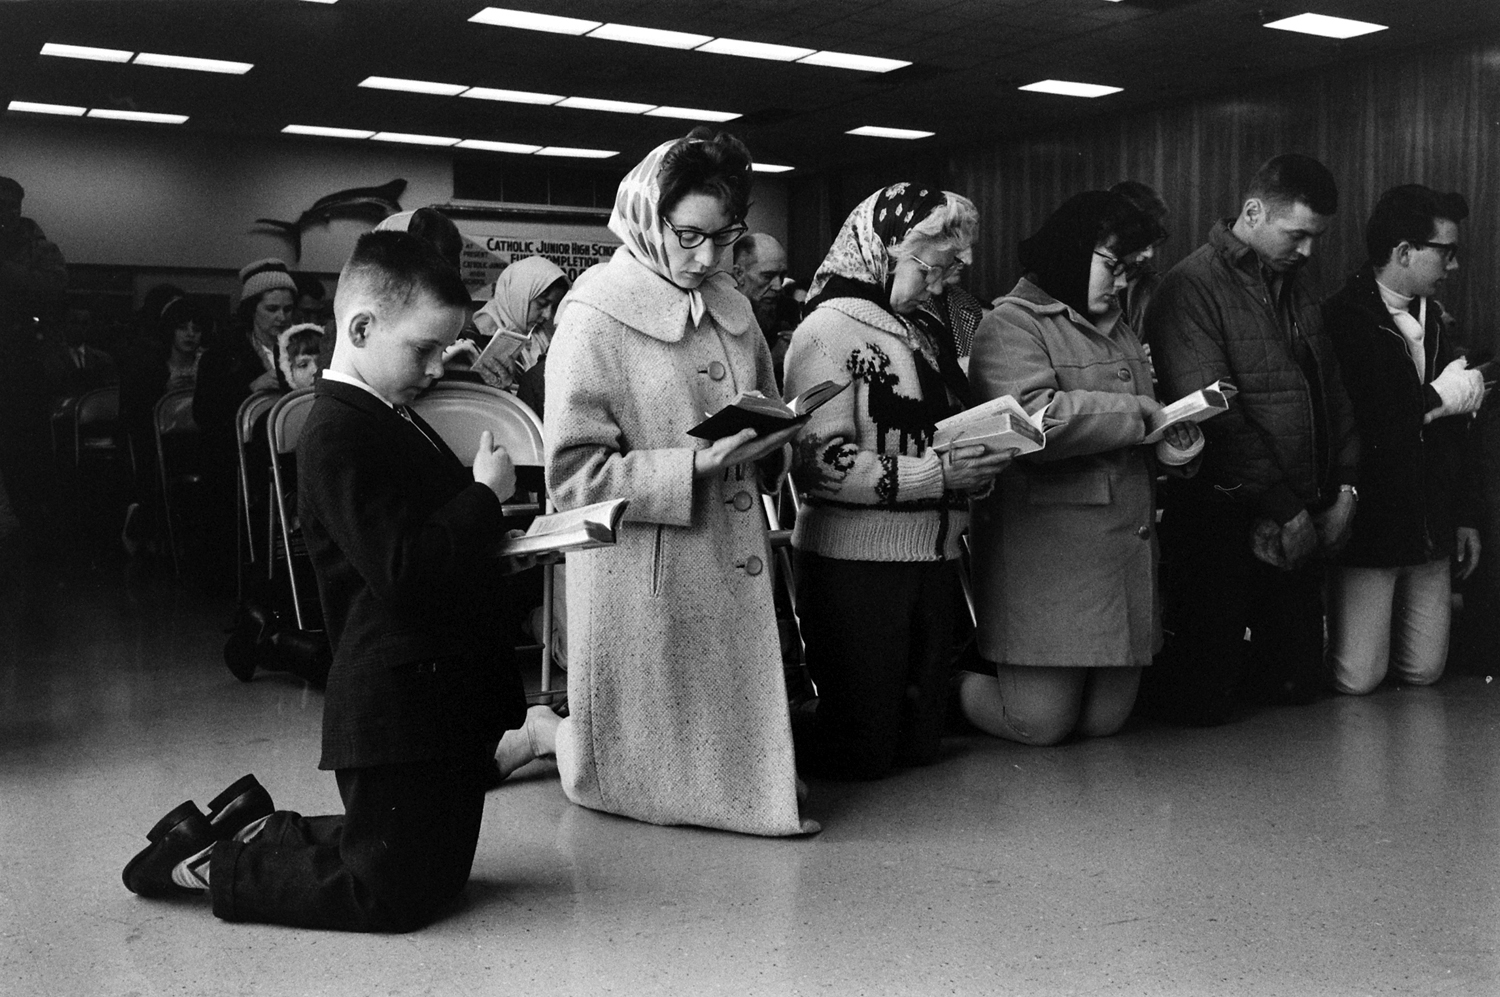 Alaskans pray after the 1964 Good Friday Earthquake.